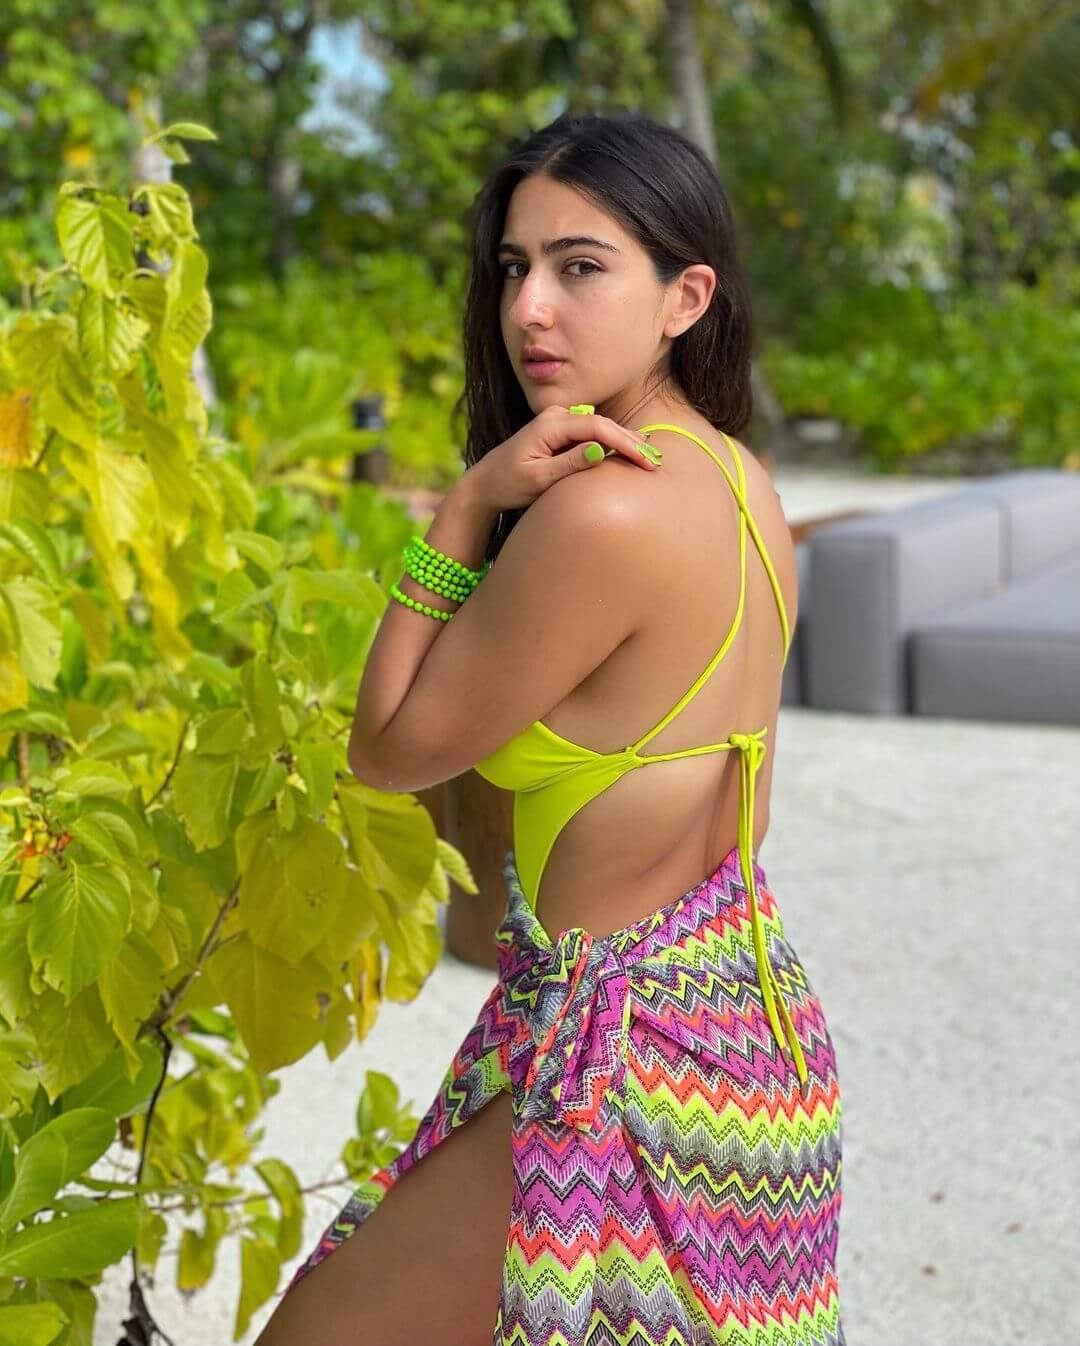 Sara Ali Khan - Sunbathing - Neon Outfits